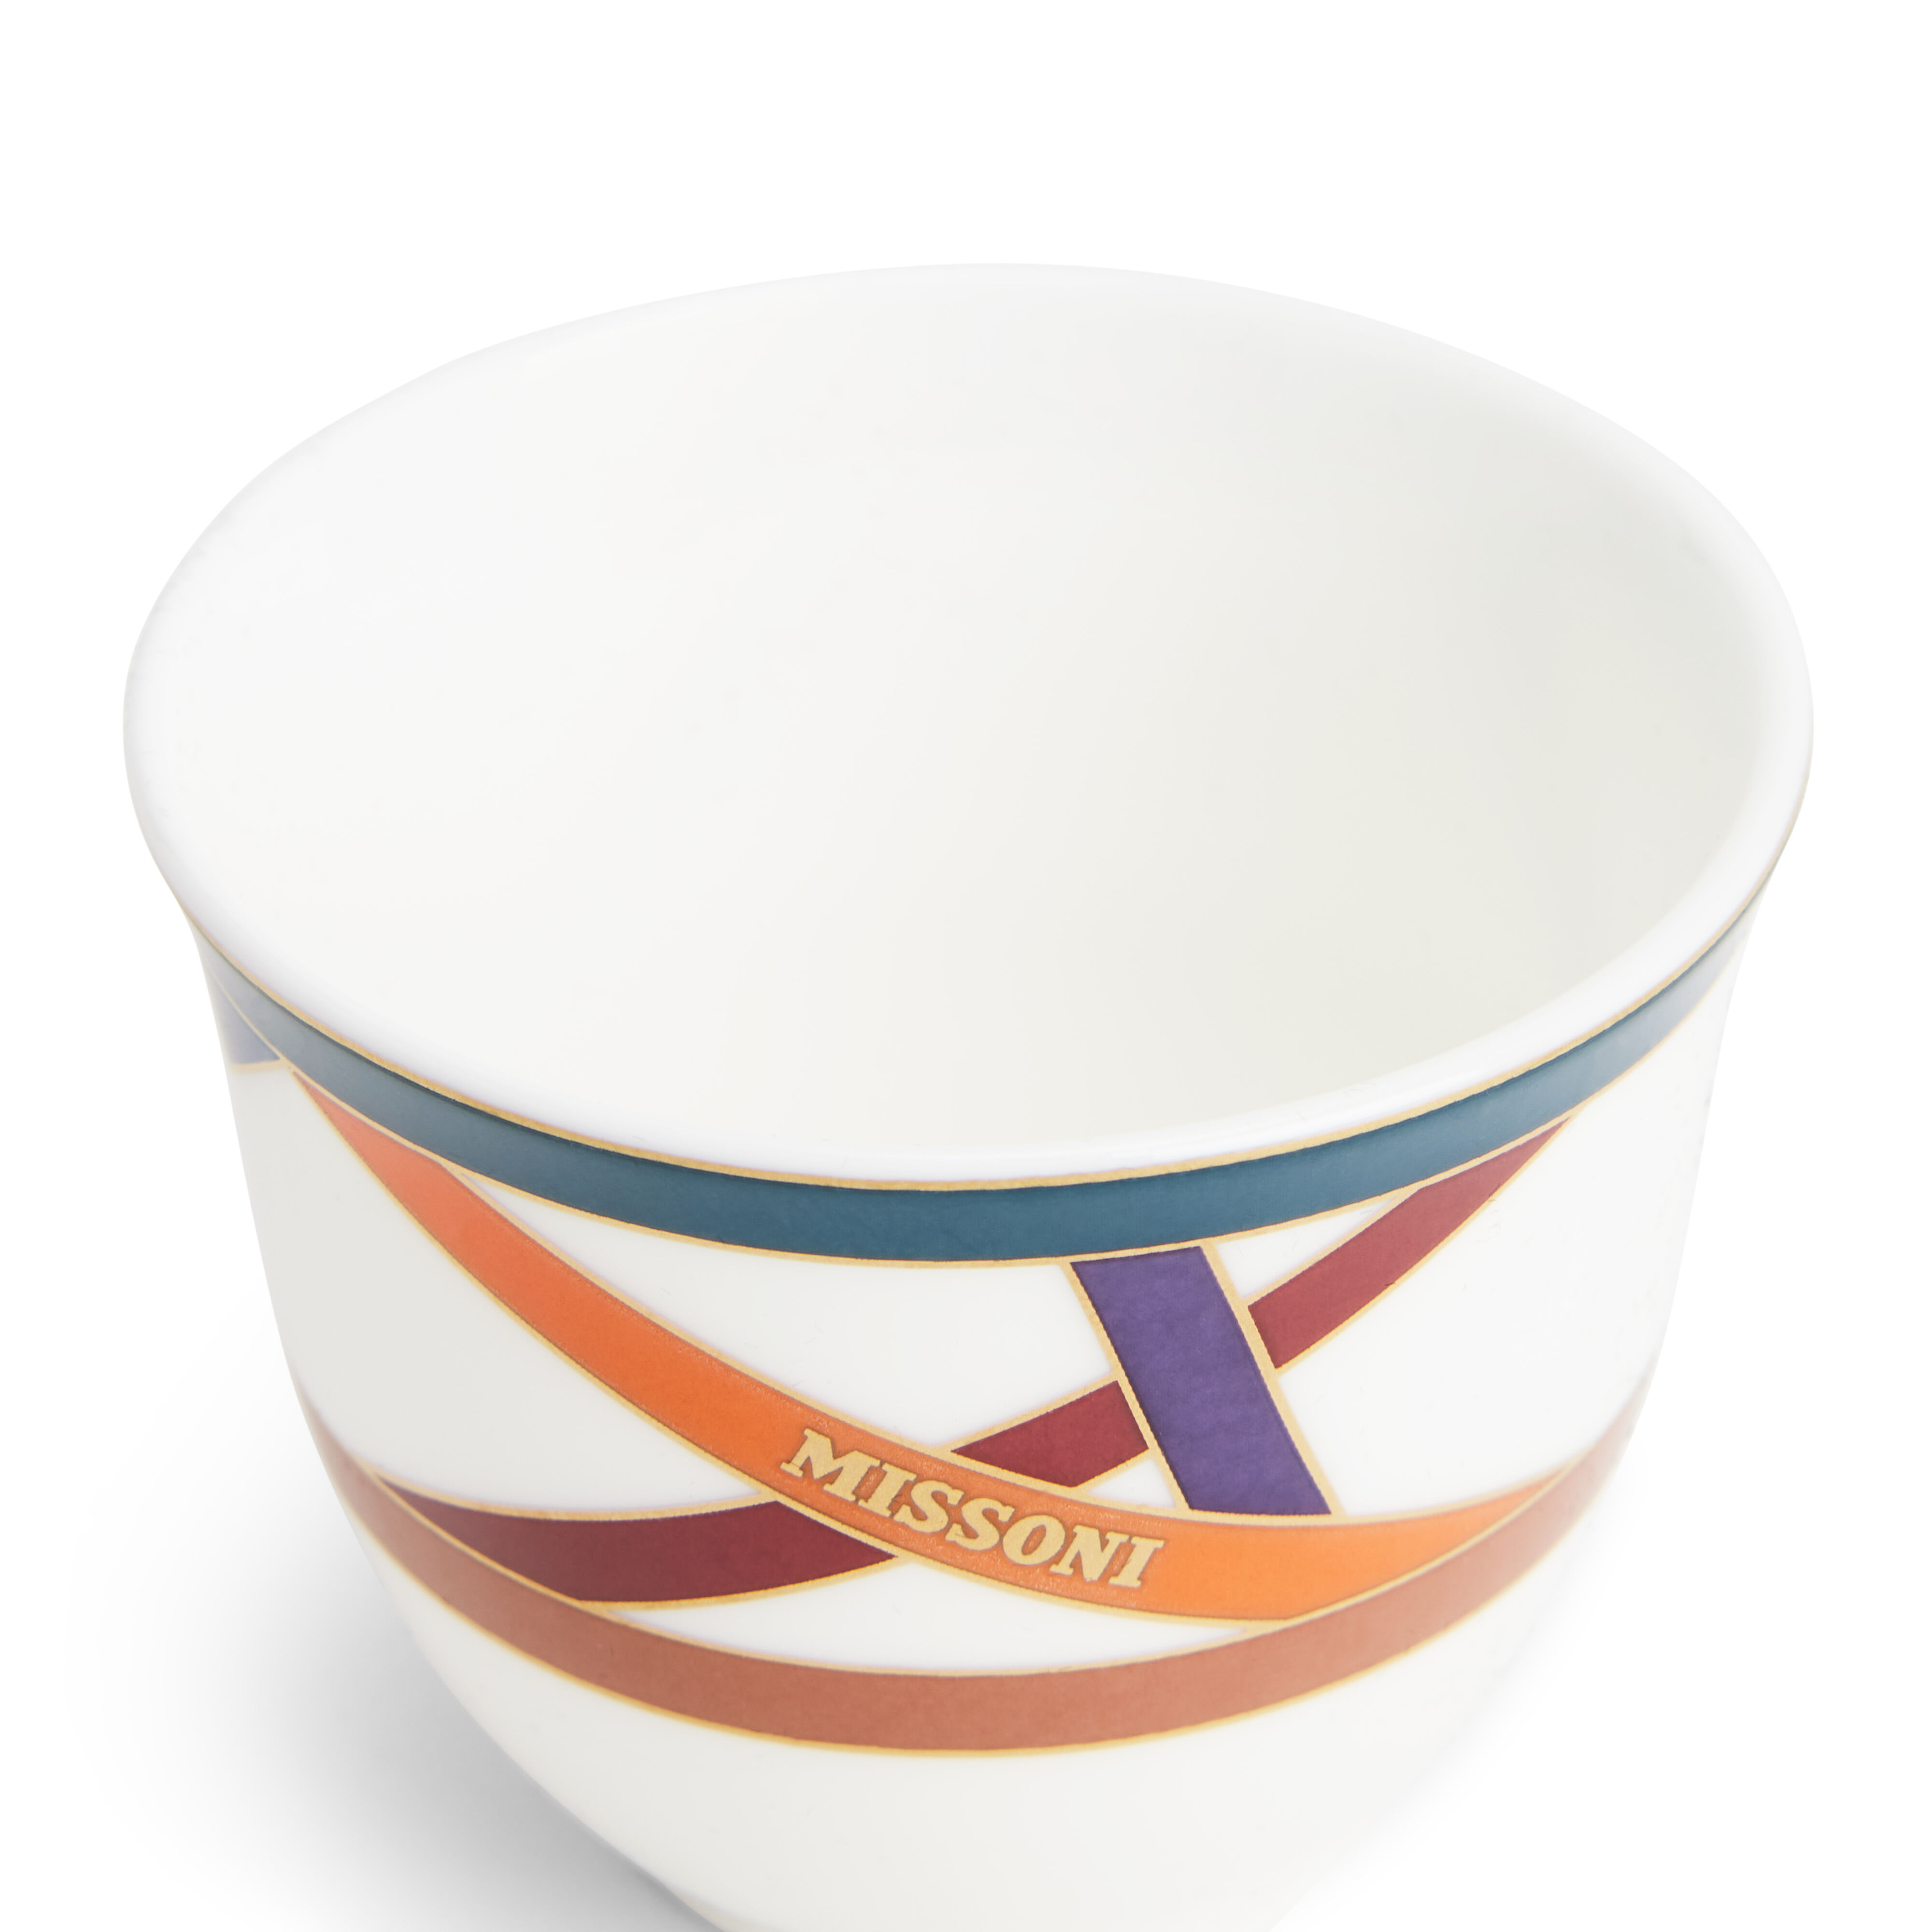 Missoni Home Nastri Arabic Cup - Set of 6 in a Luxury Box 